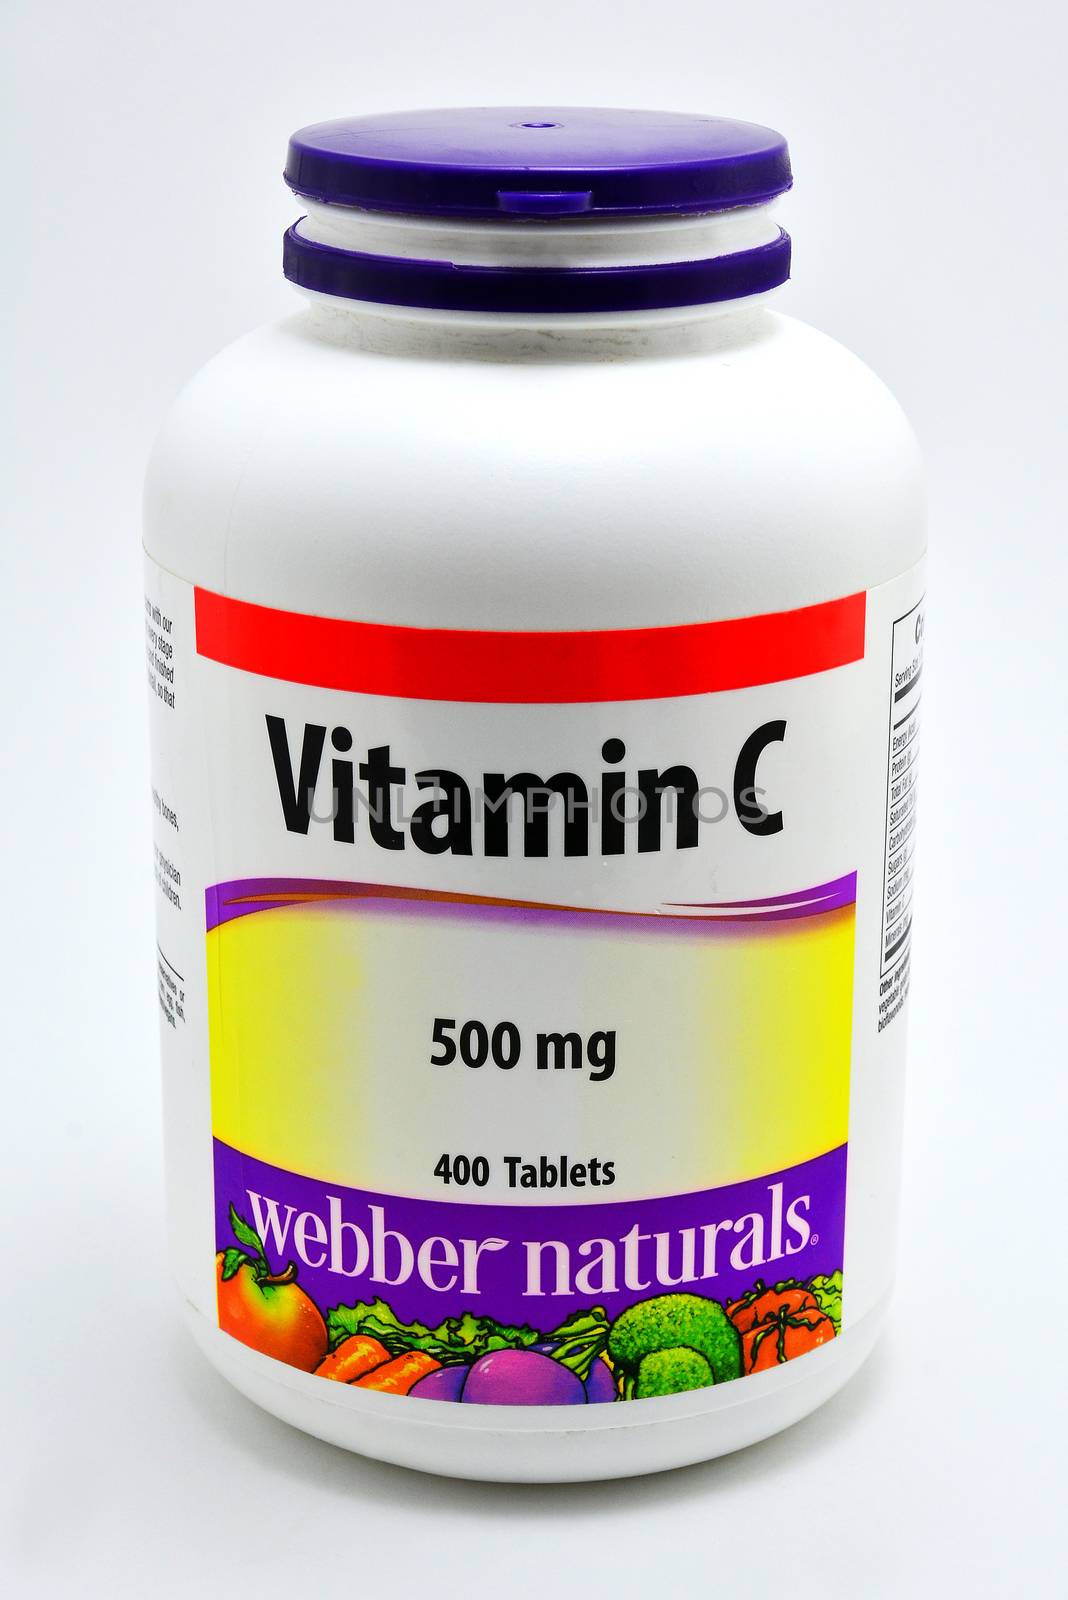 Webber naturals vitamin c bottle in Philippines by imwaltersy